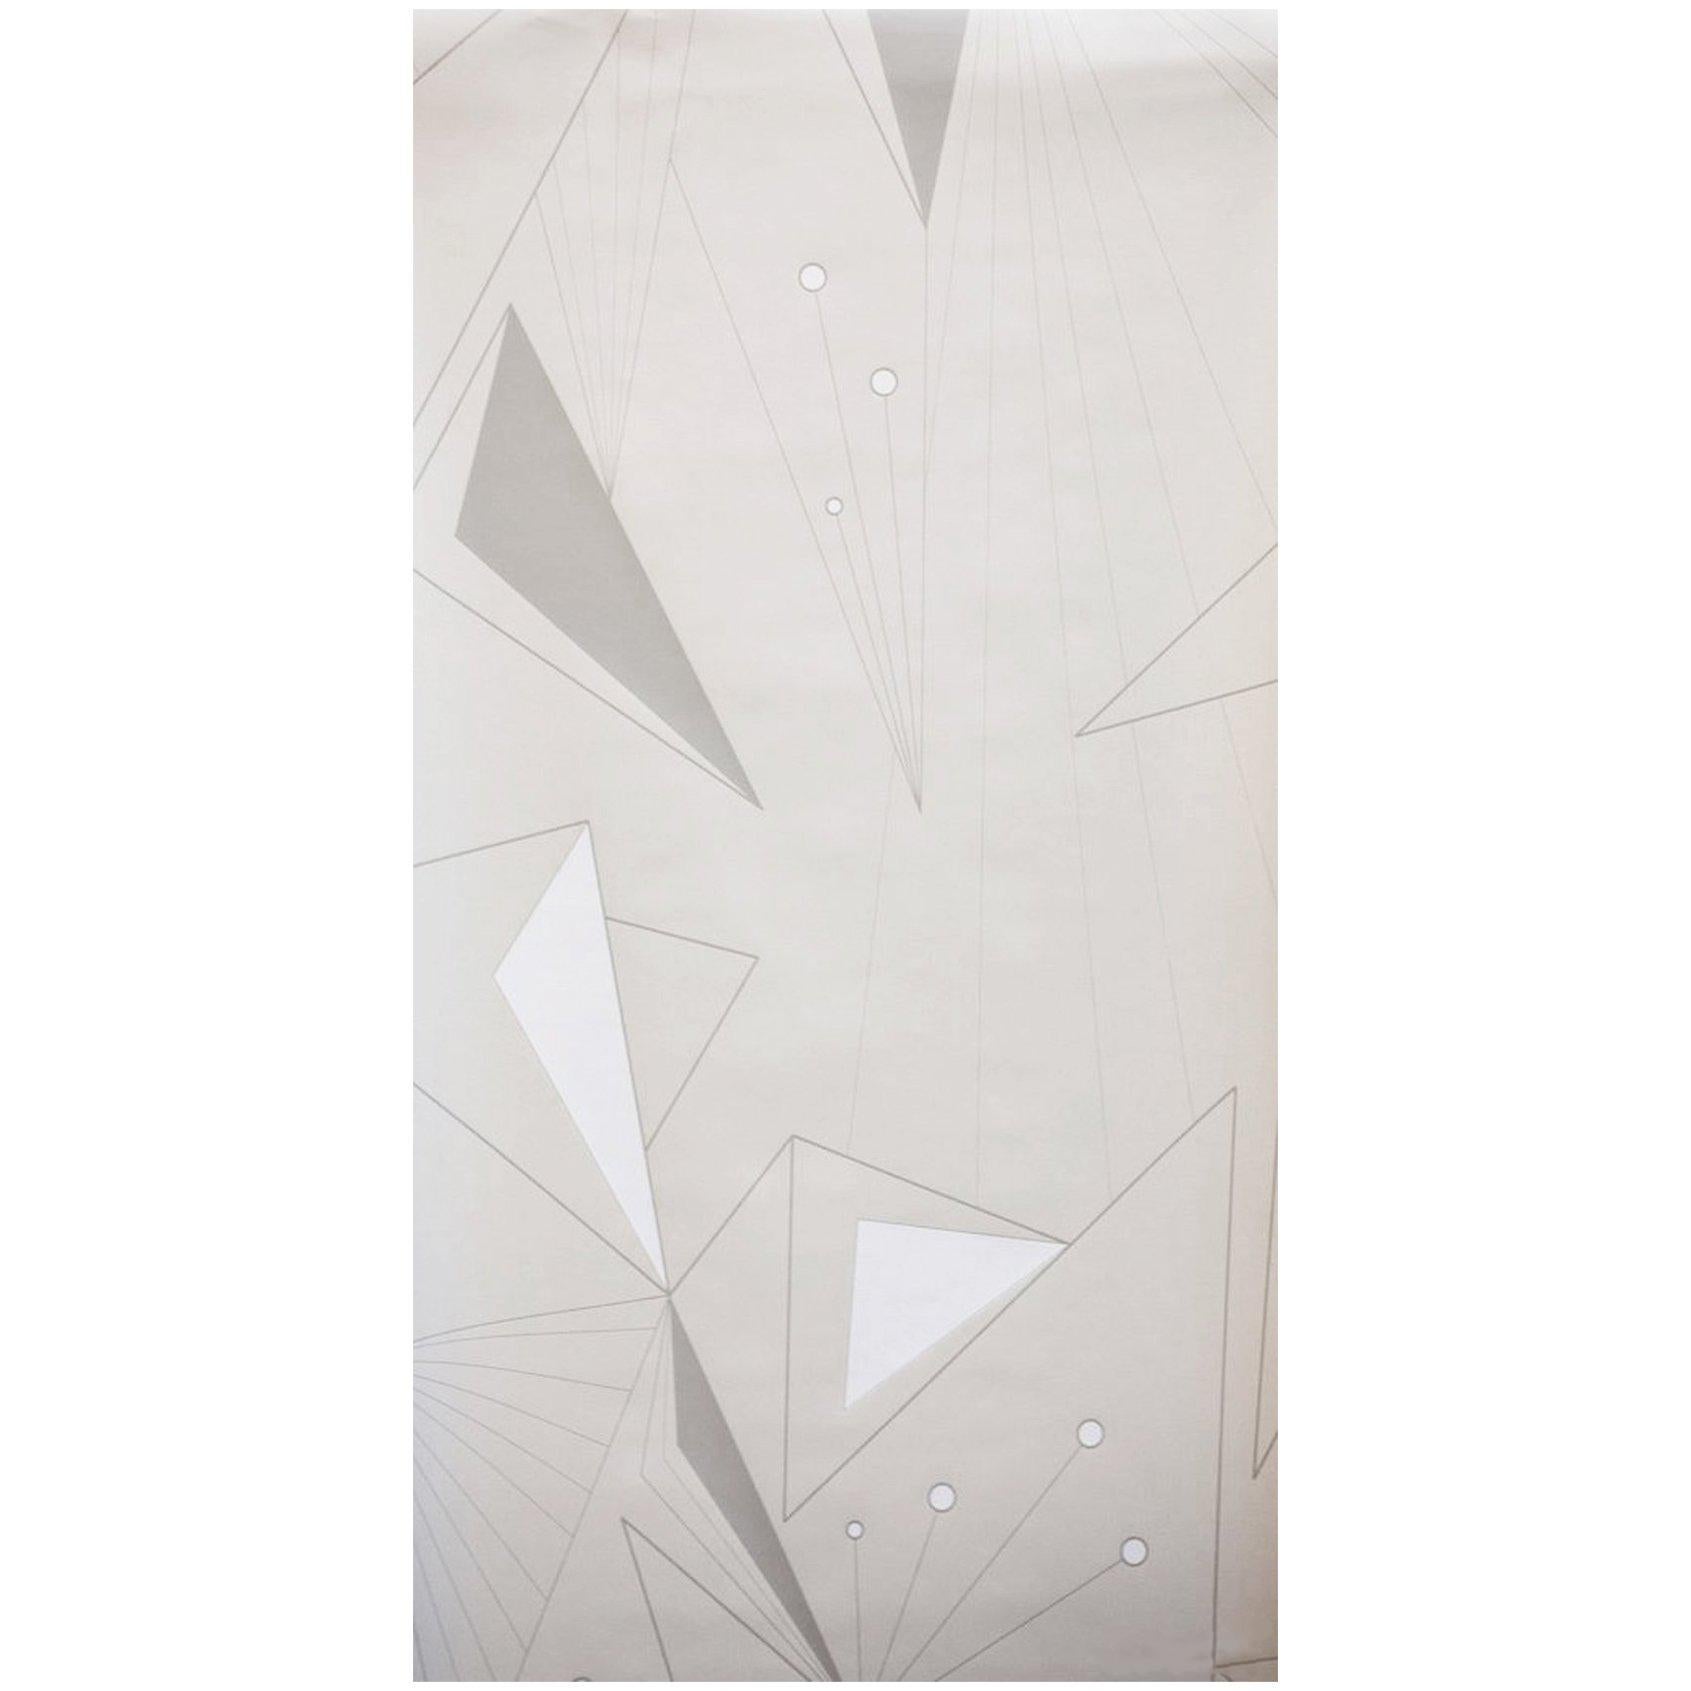 Deco Prism Screen Printed Wallpaper in Snow, Stone, White For Sale